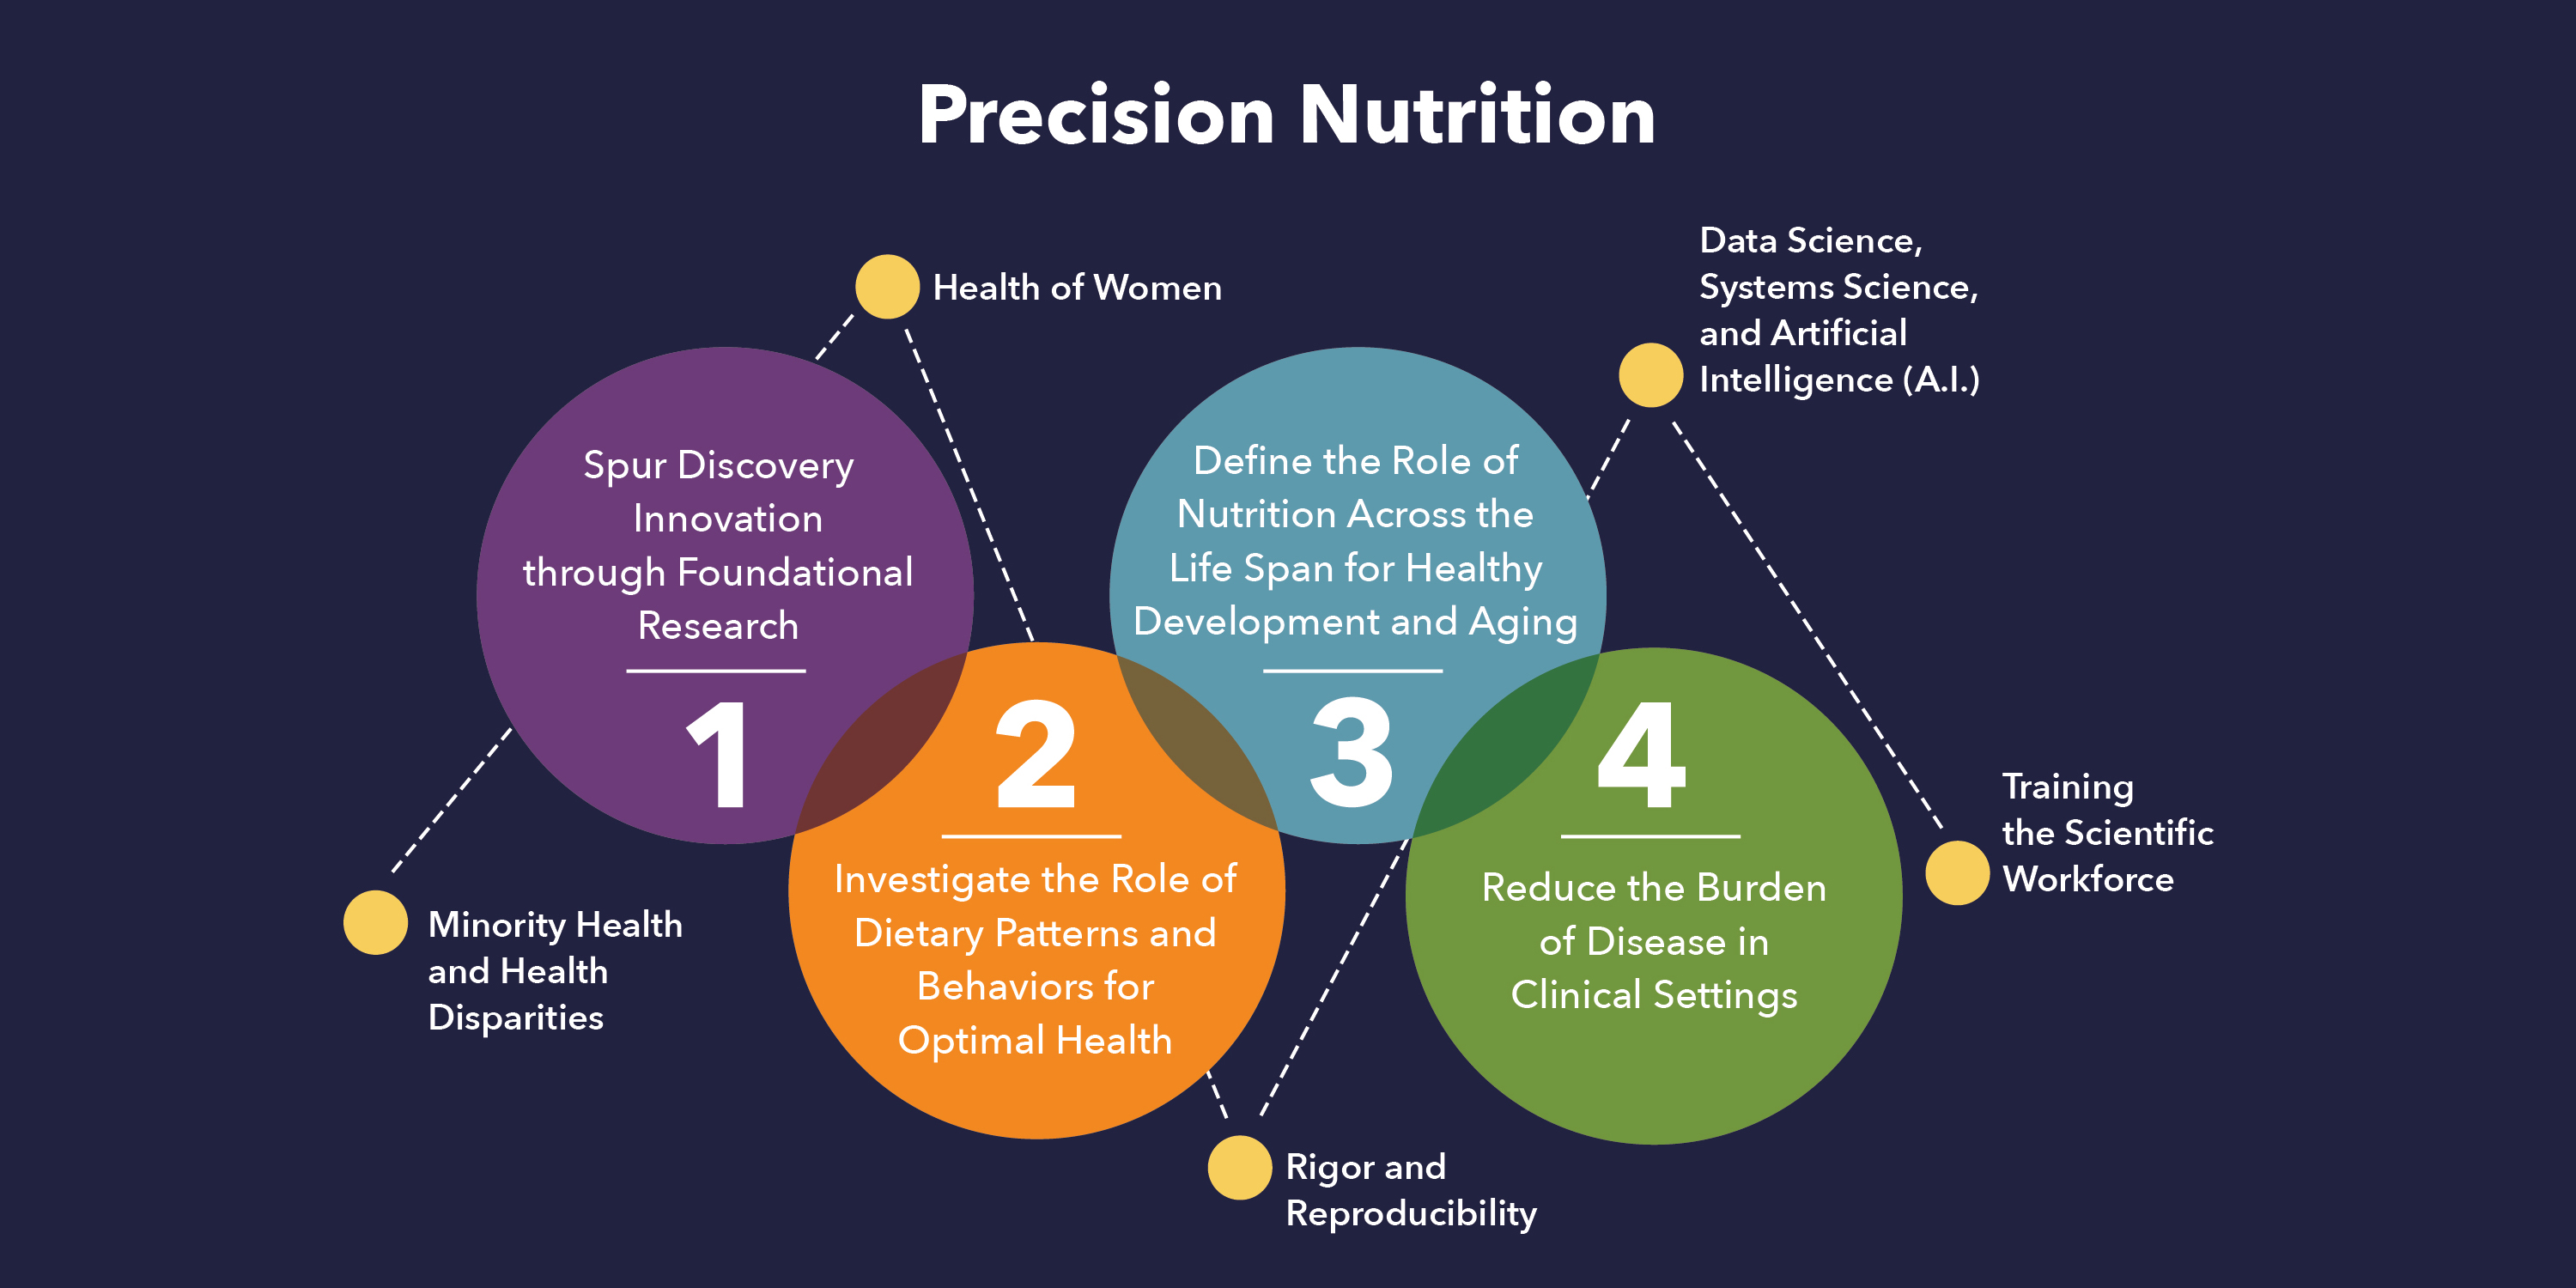 Cornell to Co-Lead NIH Center for Precision Nutrition Research